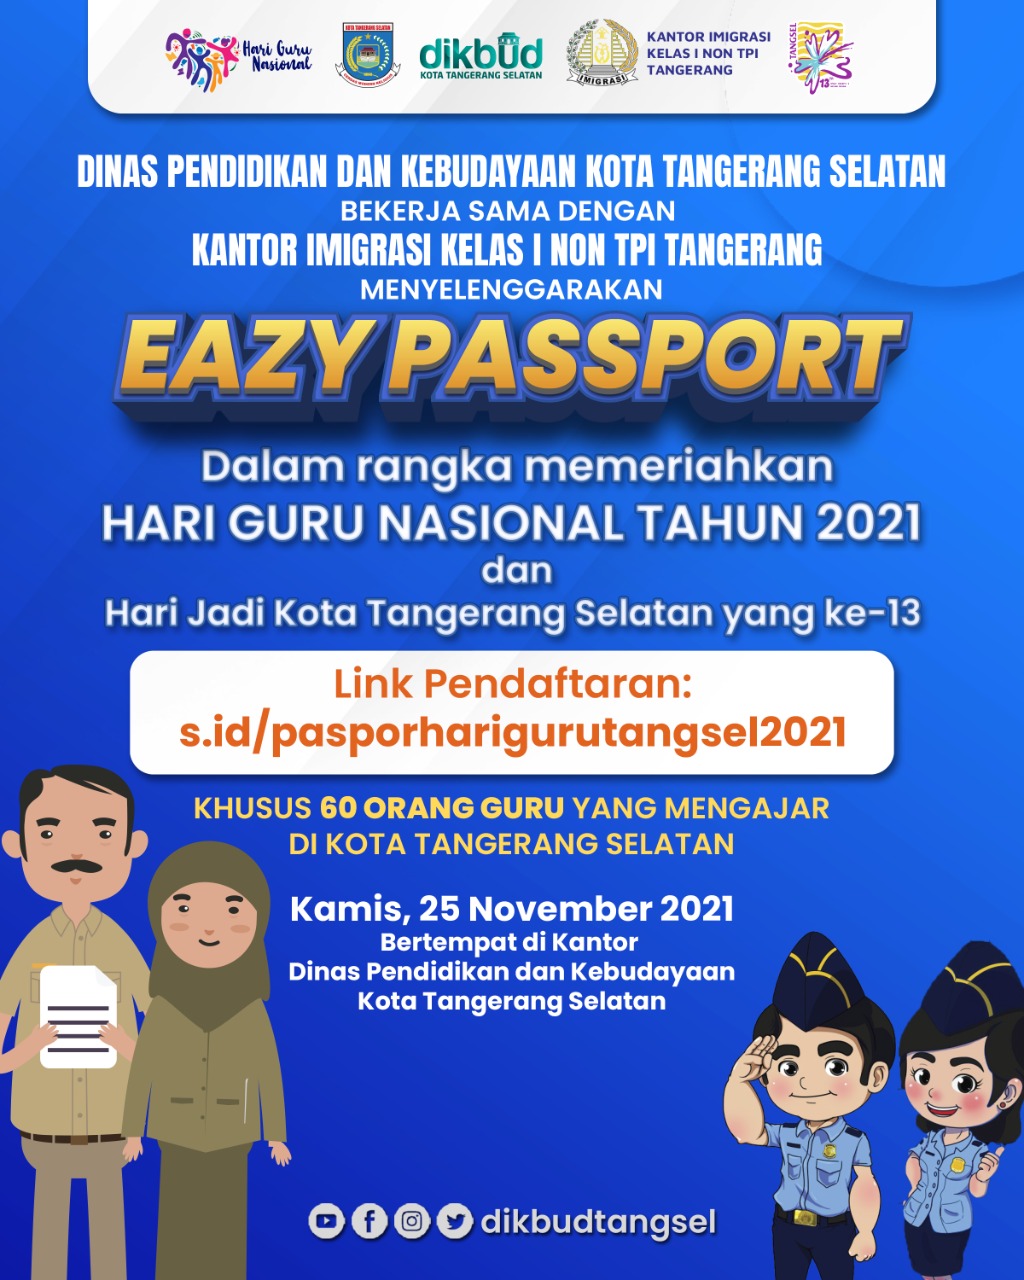 EAZY PASSPORT